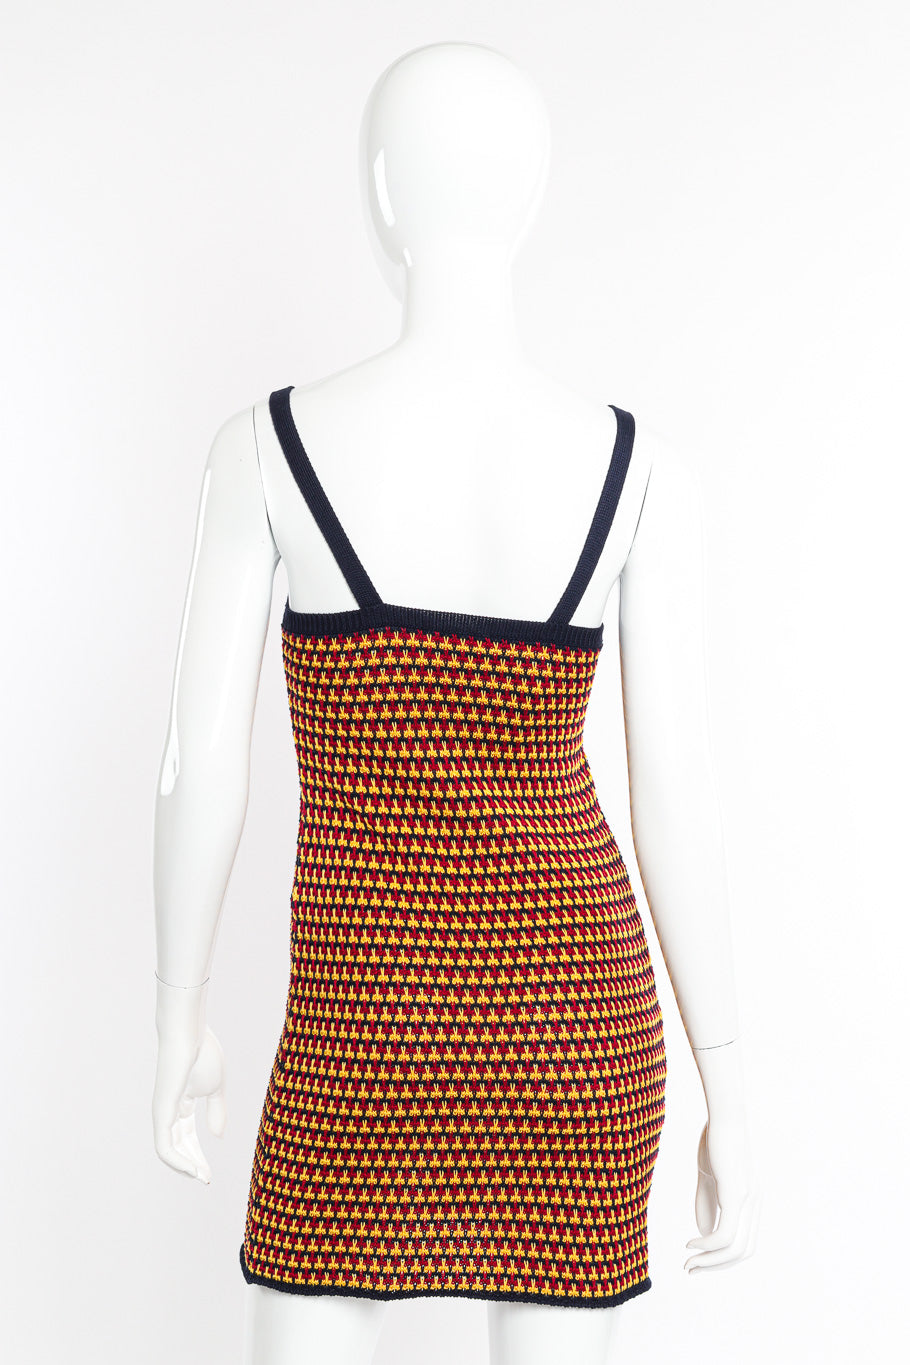 Miu Miu Scissor Knit Tank Dress back view on mannequin @Recessla